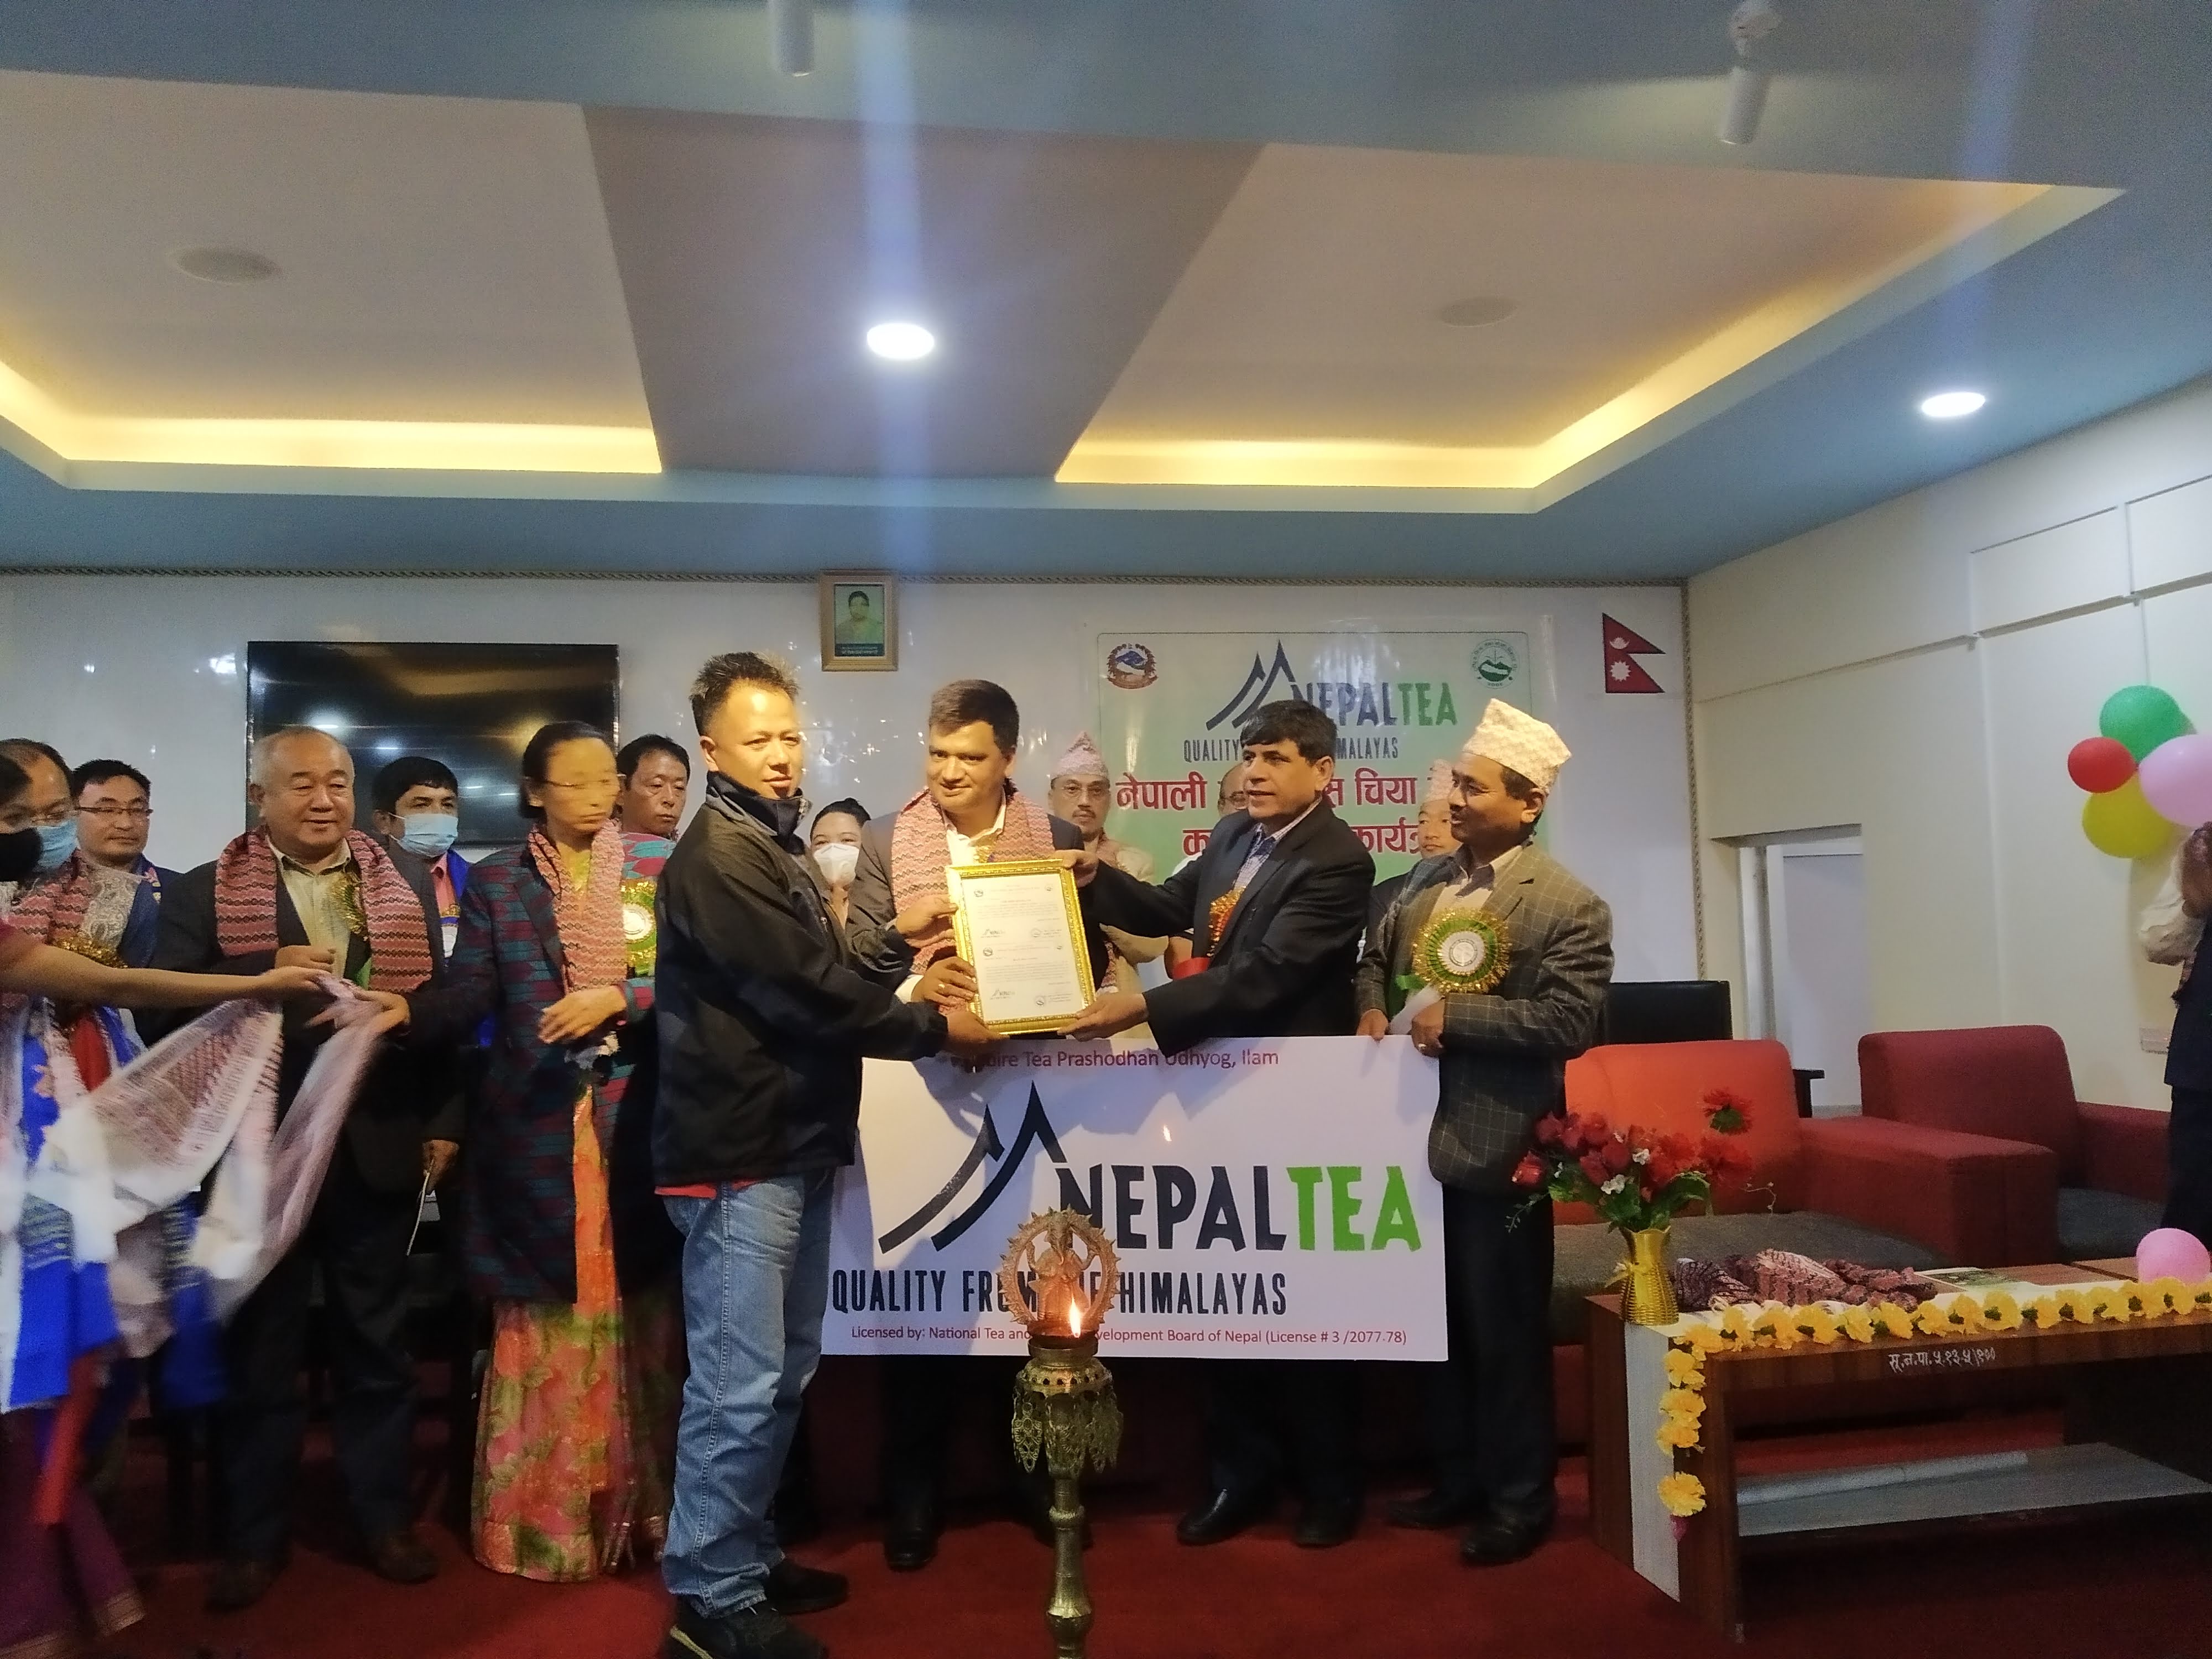 Nepal Tea Trademark Implementation Program Image